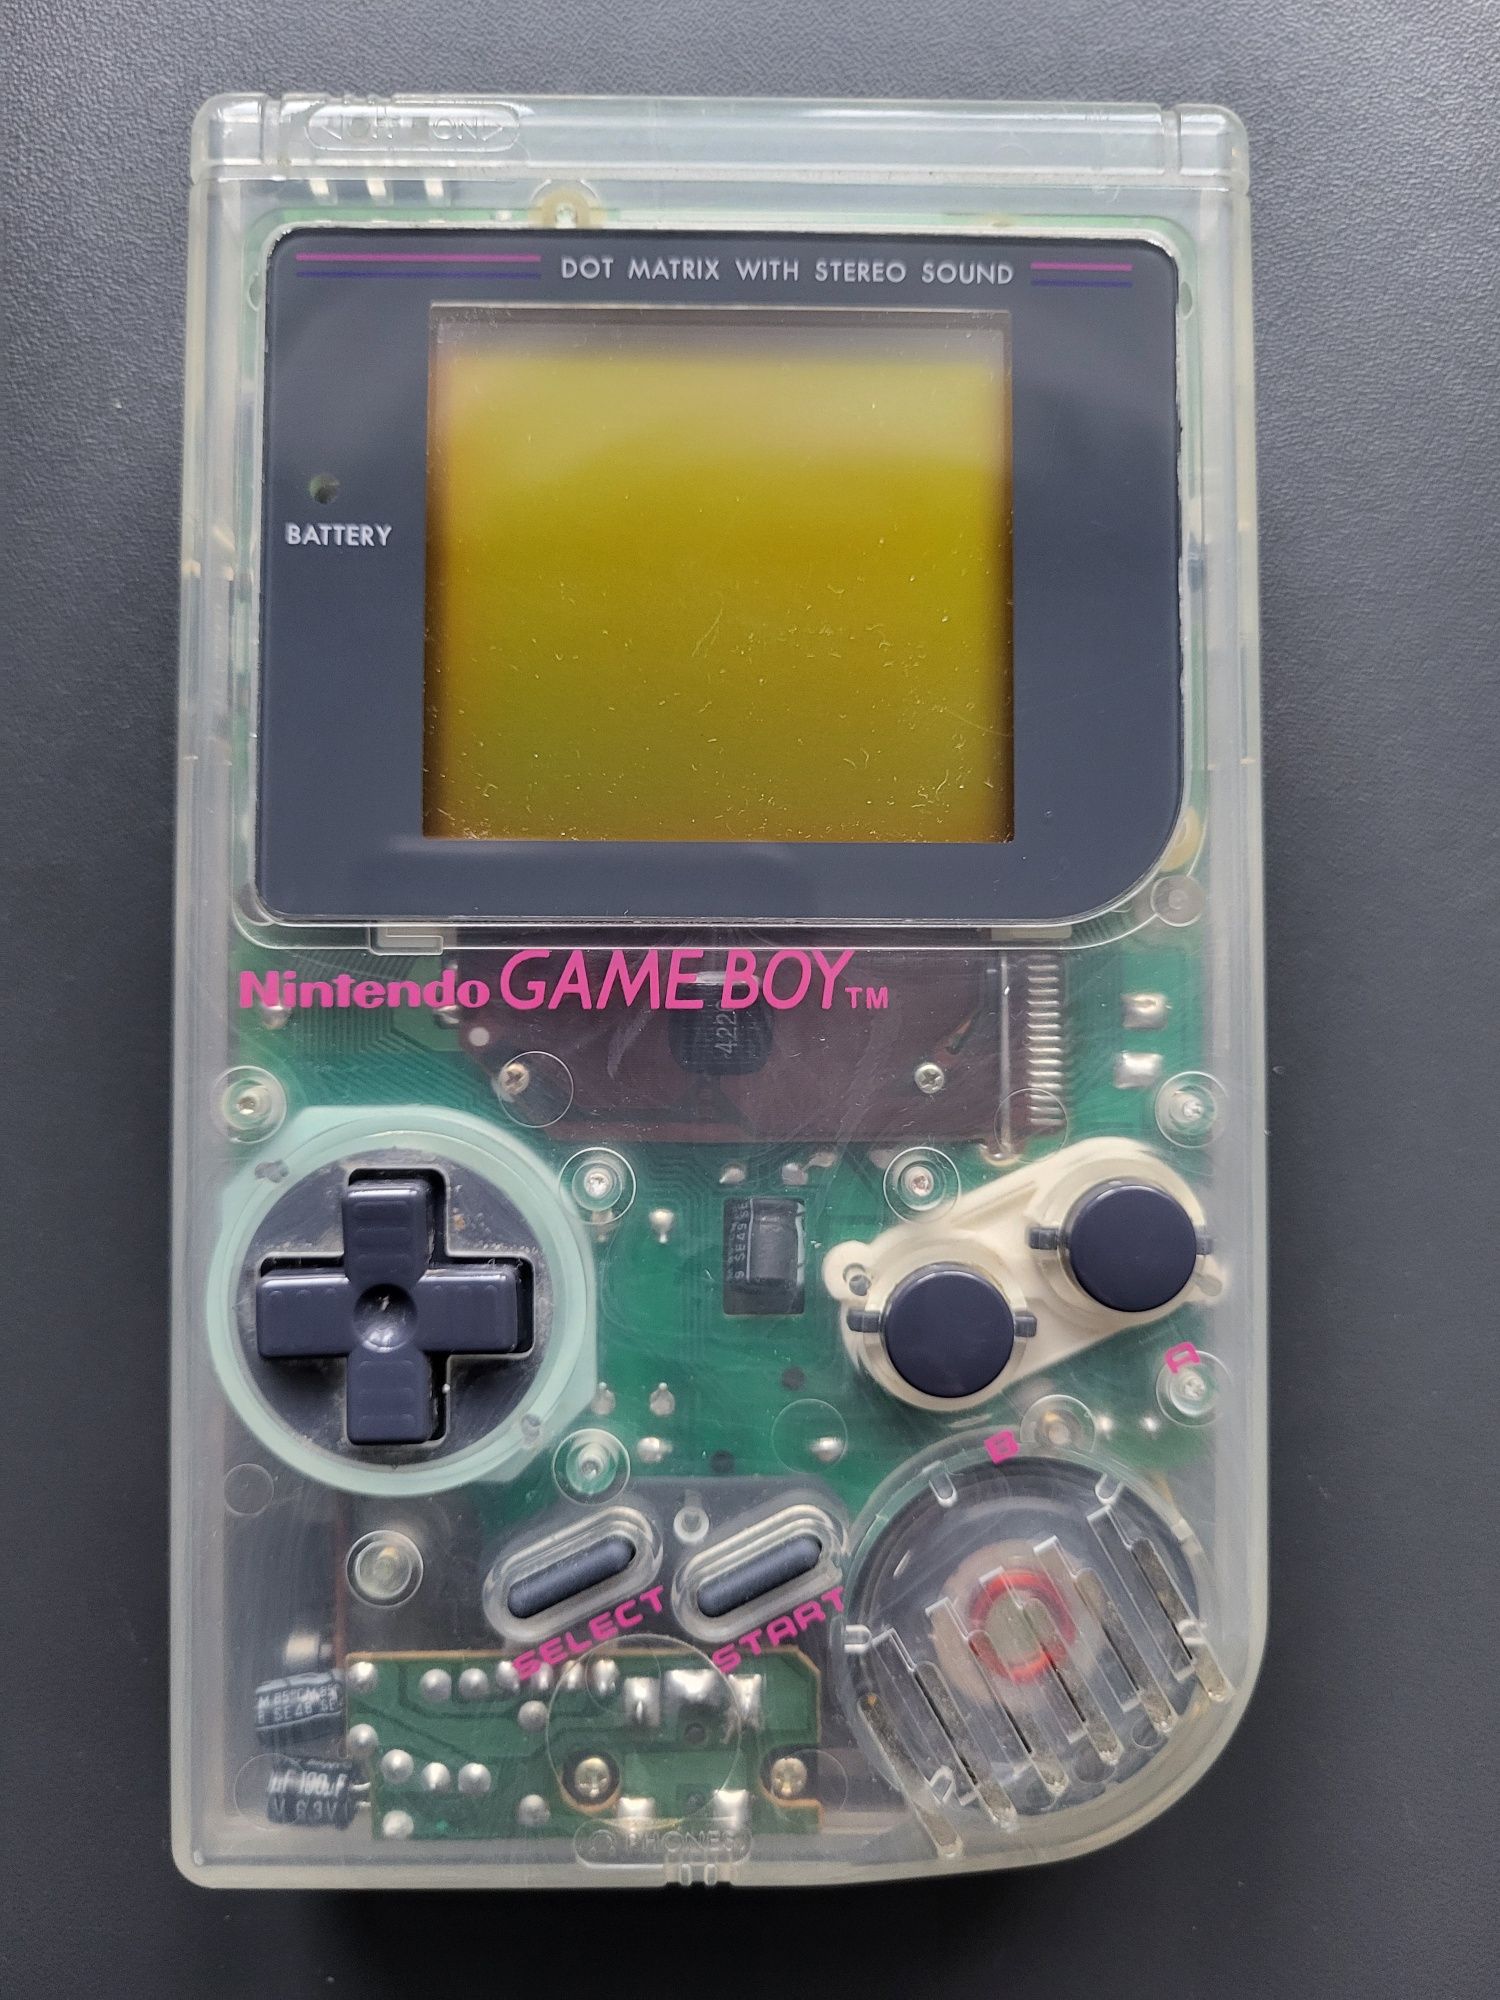 Gameboy dmg-01 limited edition